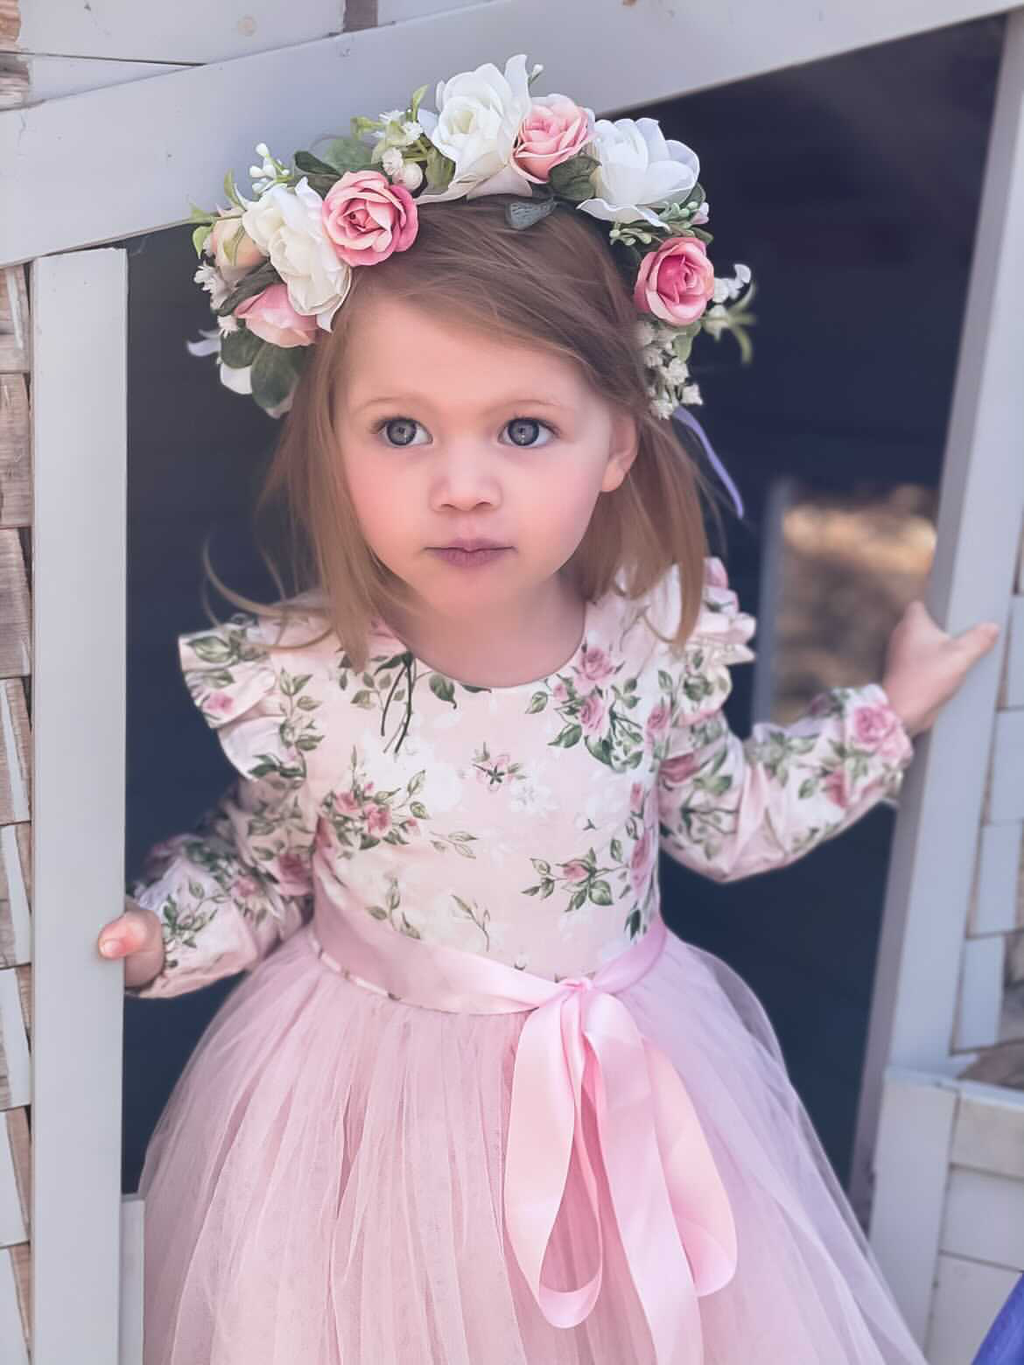 Audrey Rose Girls Long Sleeve Dress - Baby Dresses